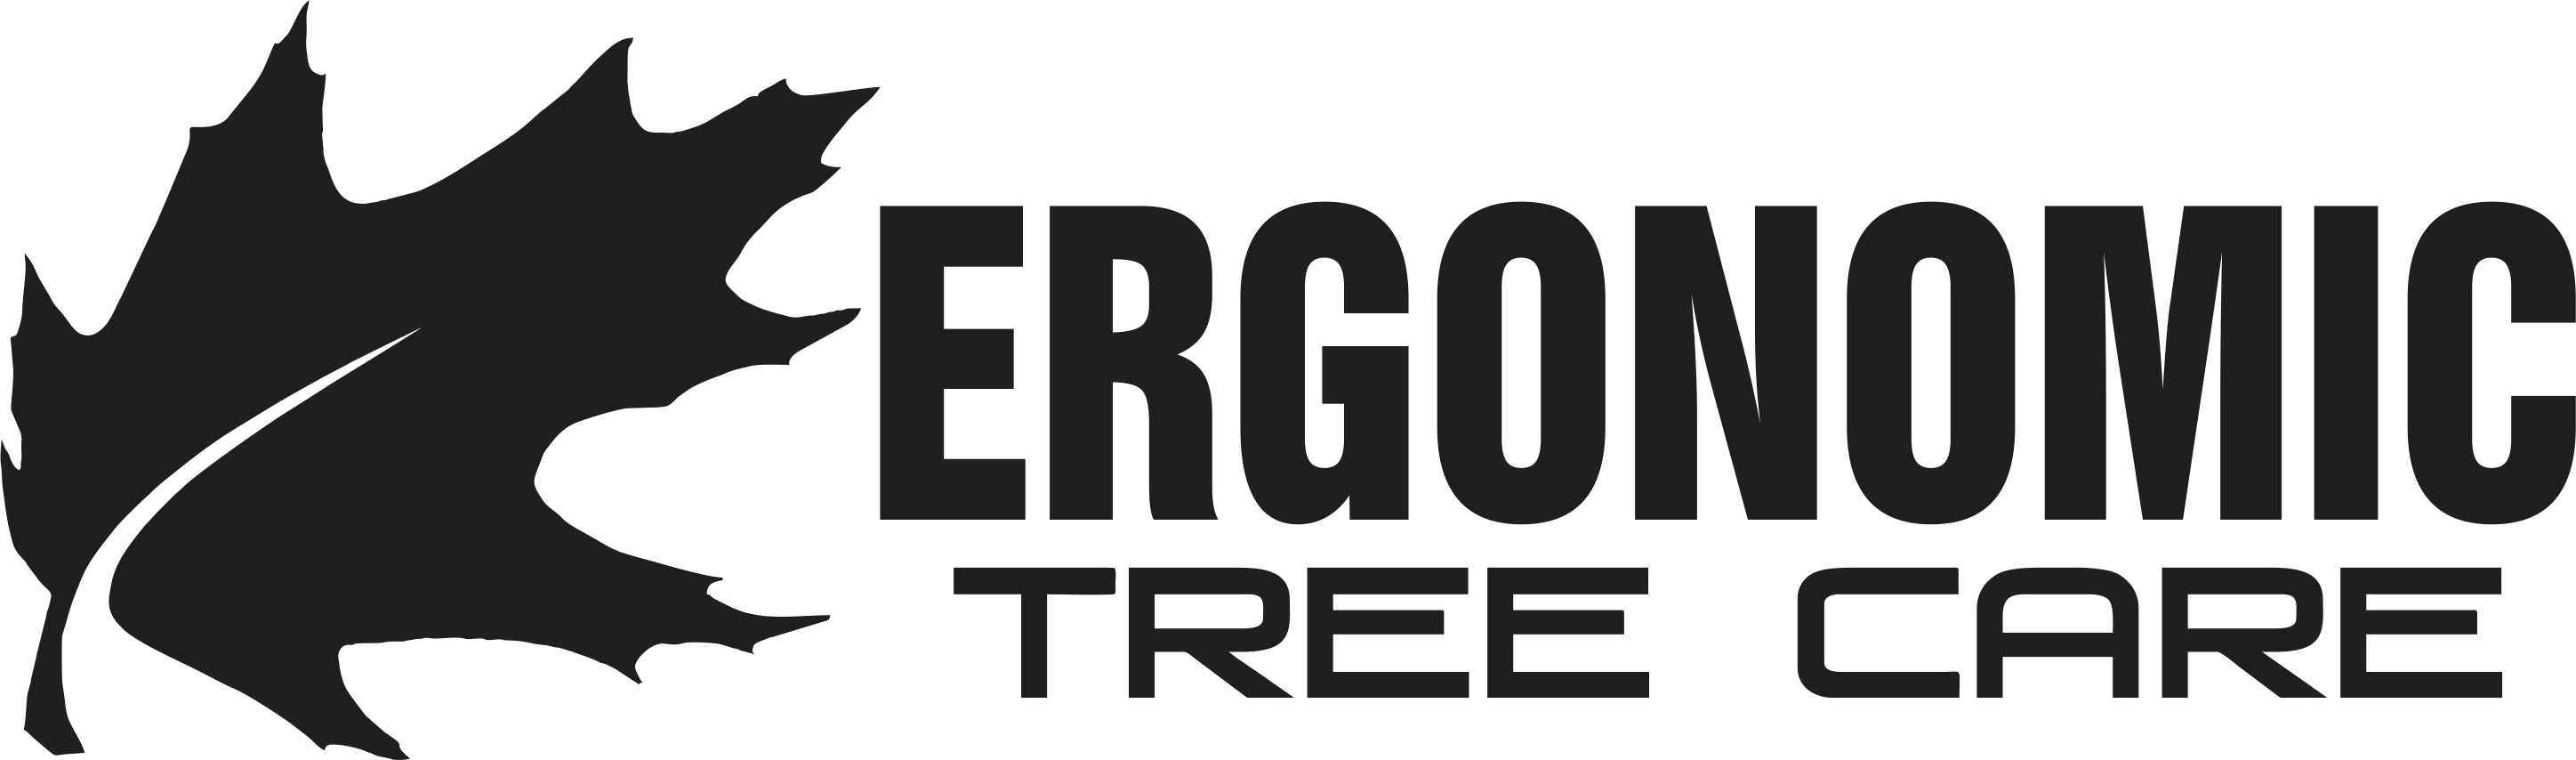 Ergonomic Tree Care, LLC Logo